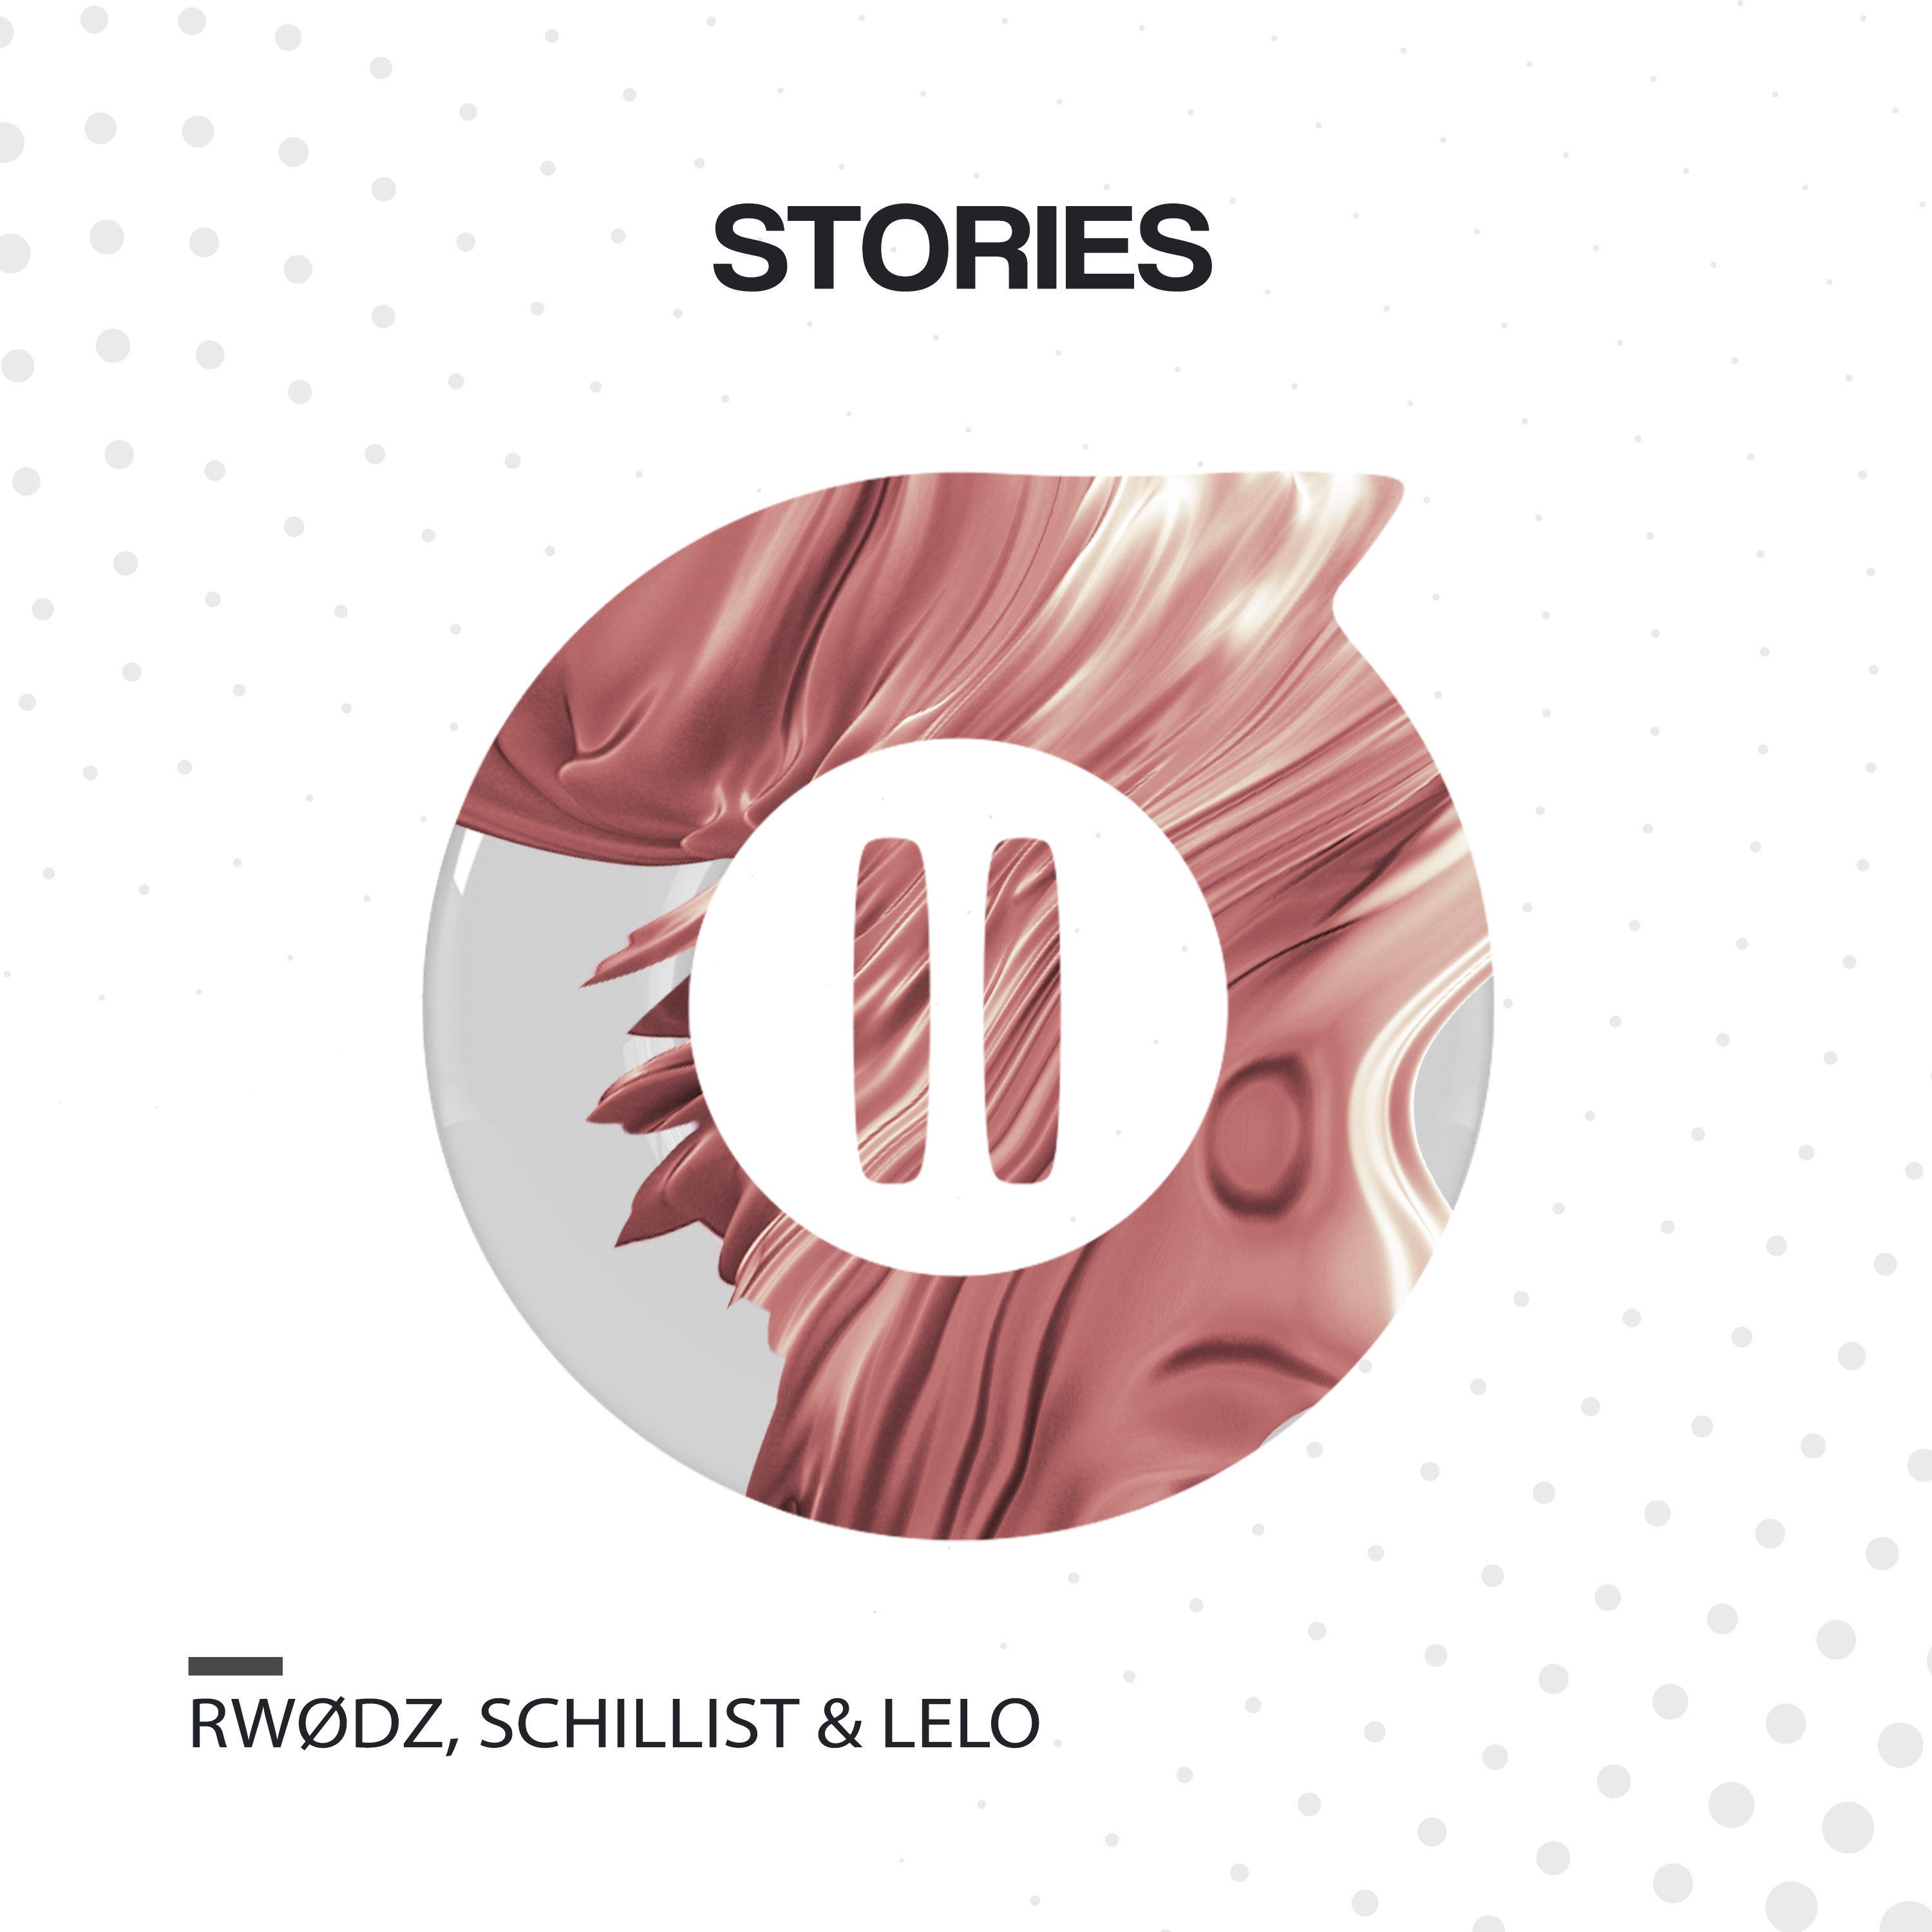 Rwodz - Stories